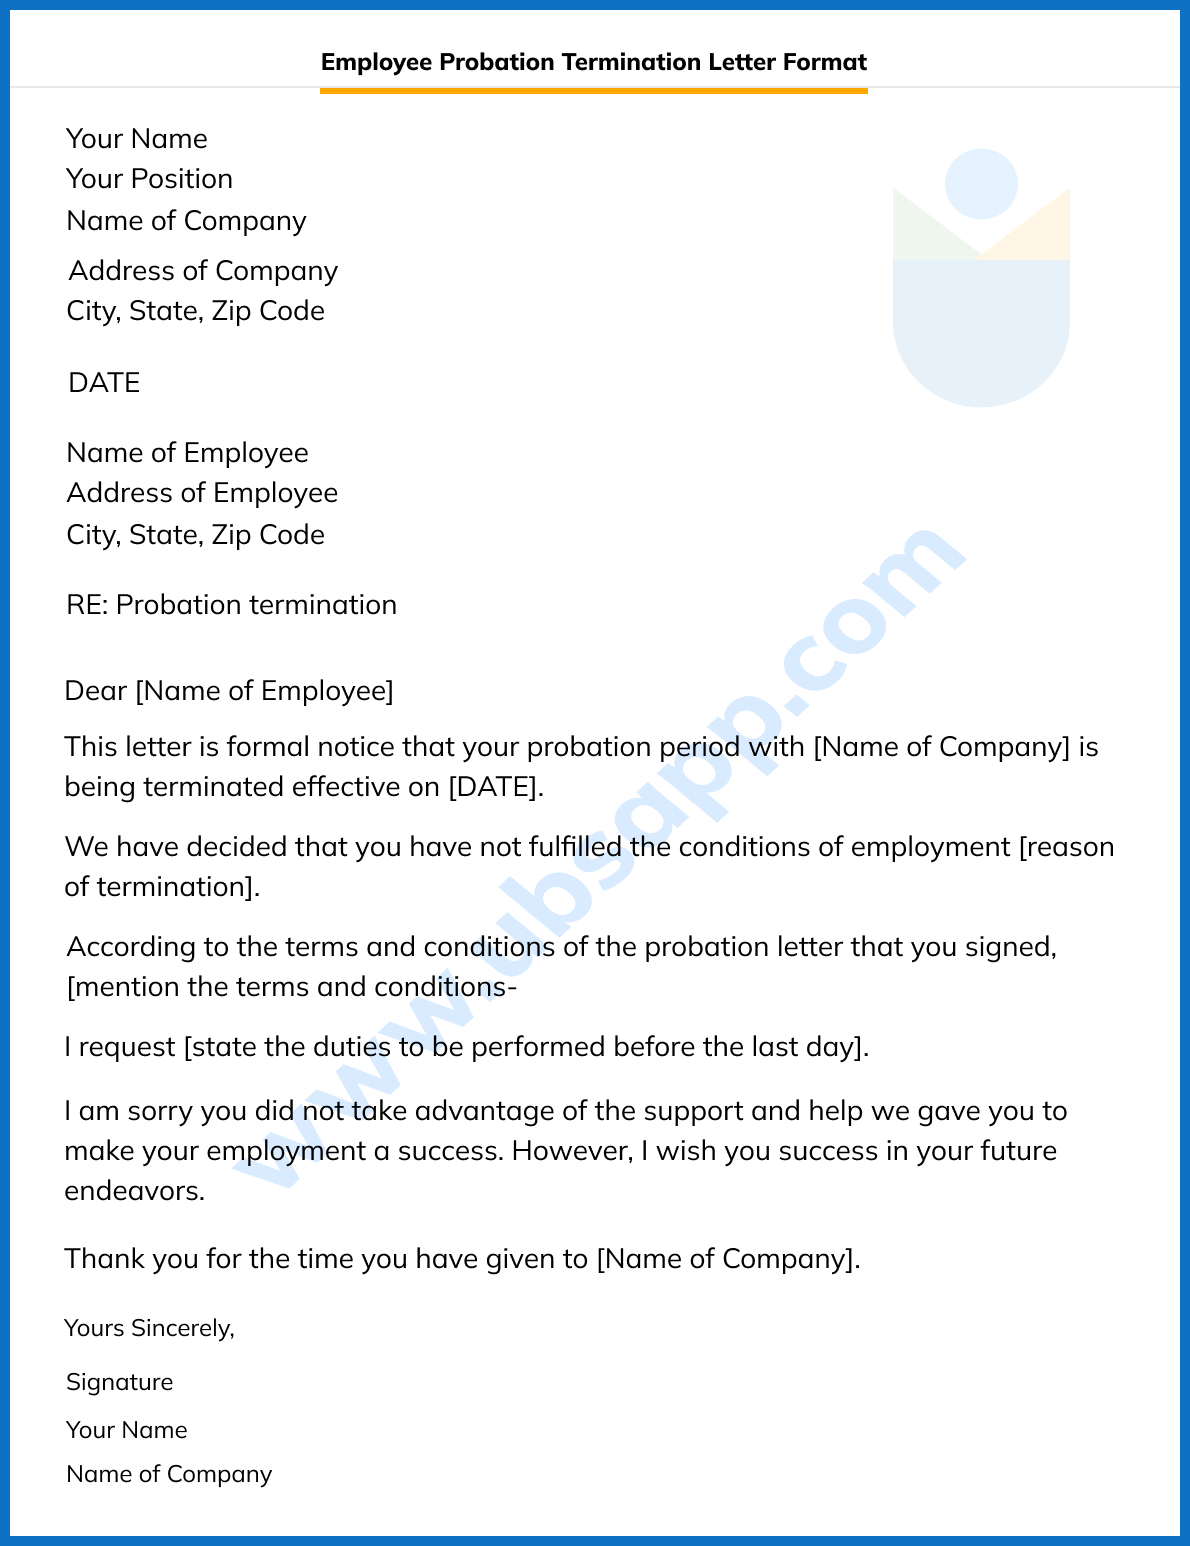 Employee Probation Termination Letter Format